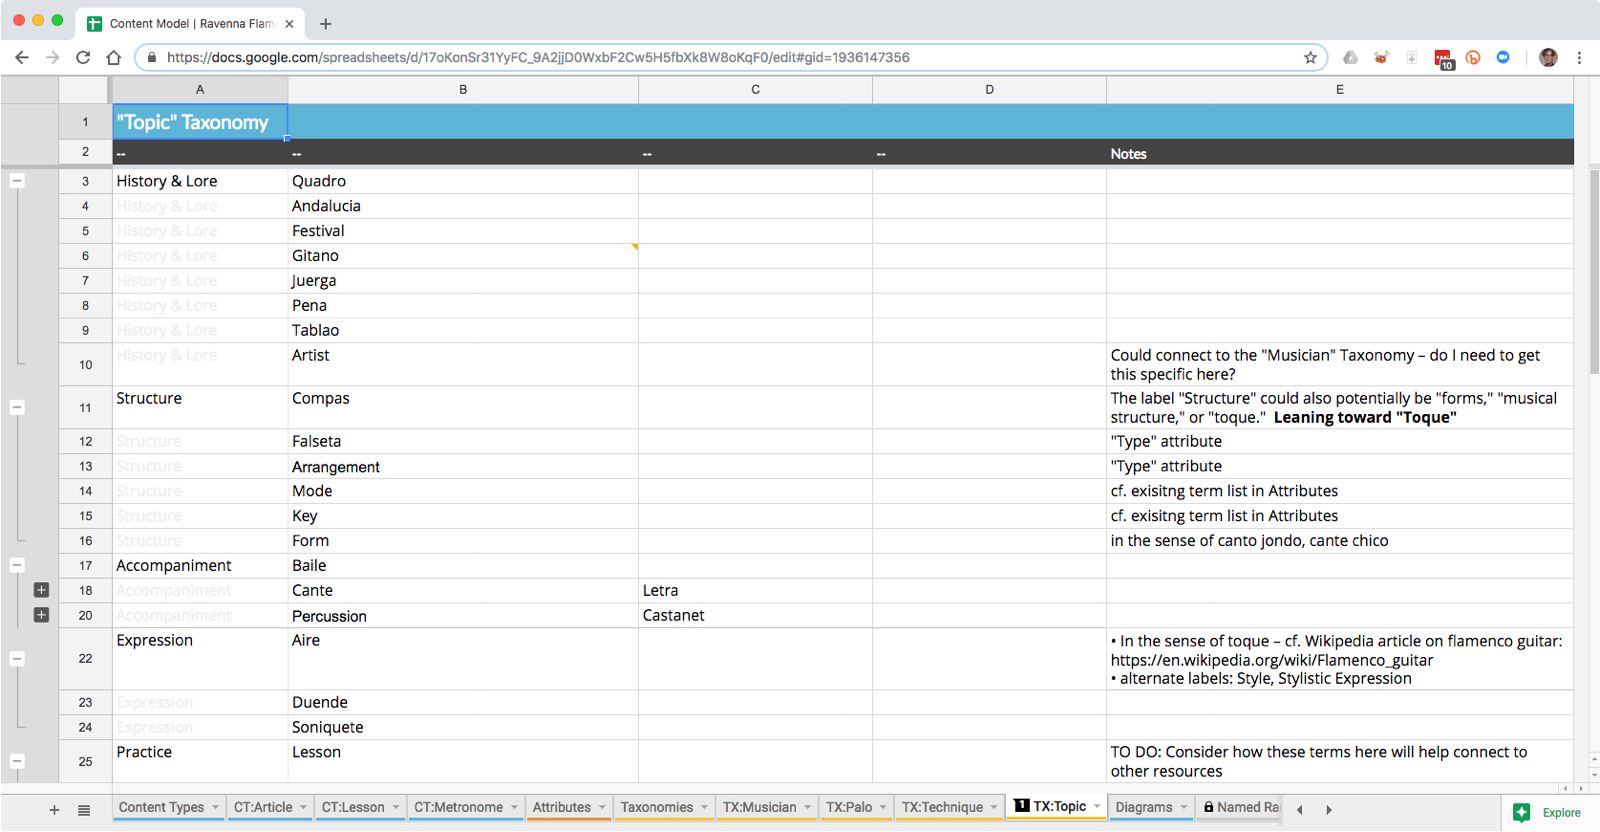 A screenshot of a spreadsheet depiction of individual Ravenna Flamenco taxonomies